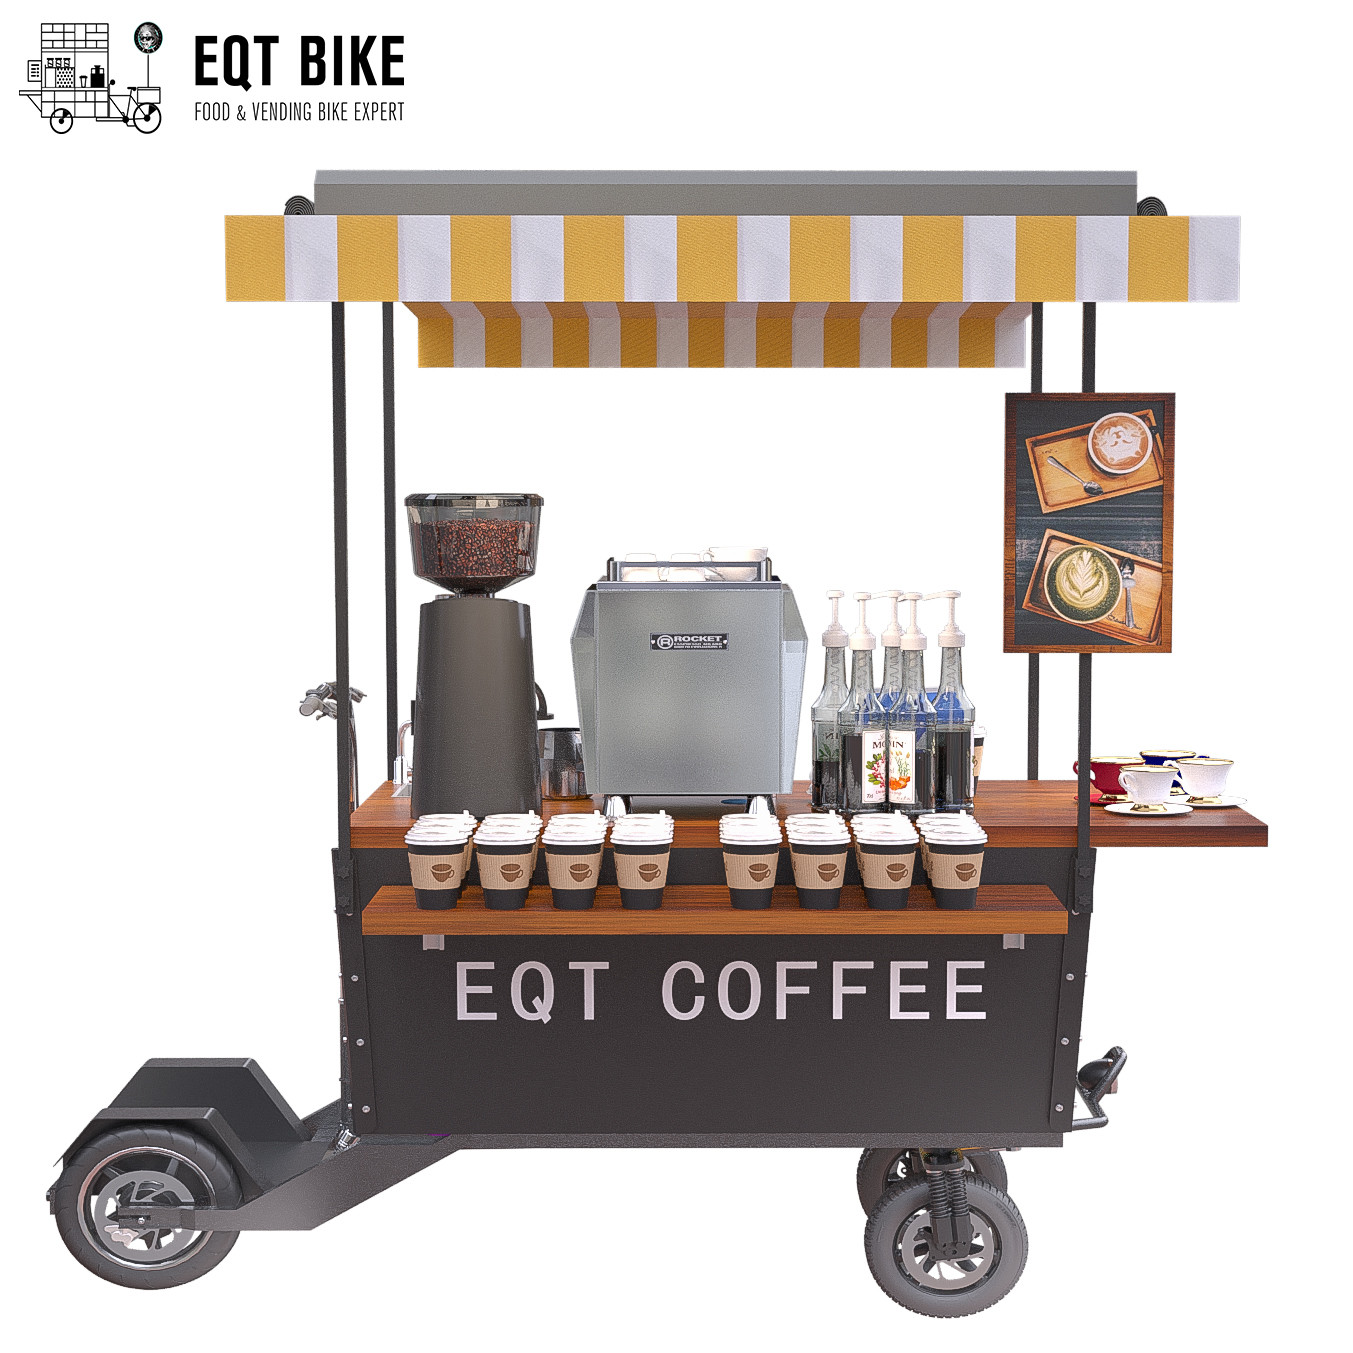 Carro móvil del café de la vespa multifuncional de EQT para el negocio de la calle